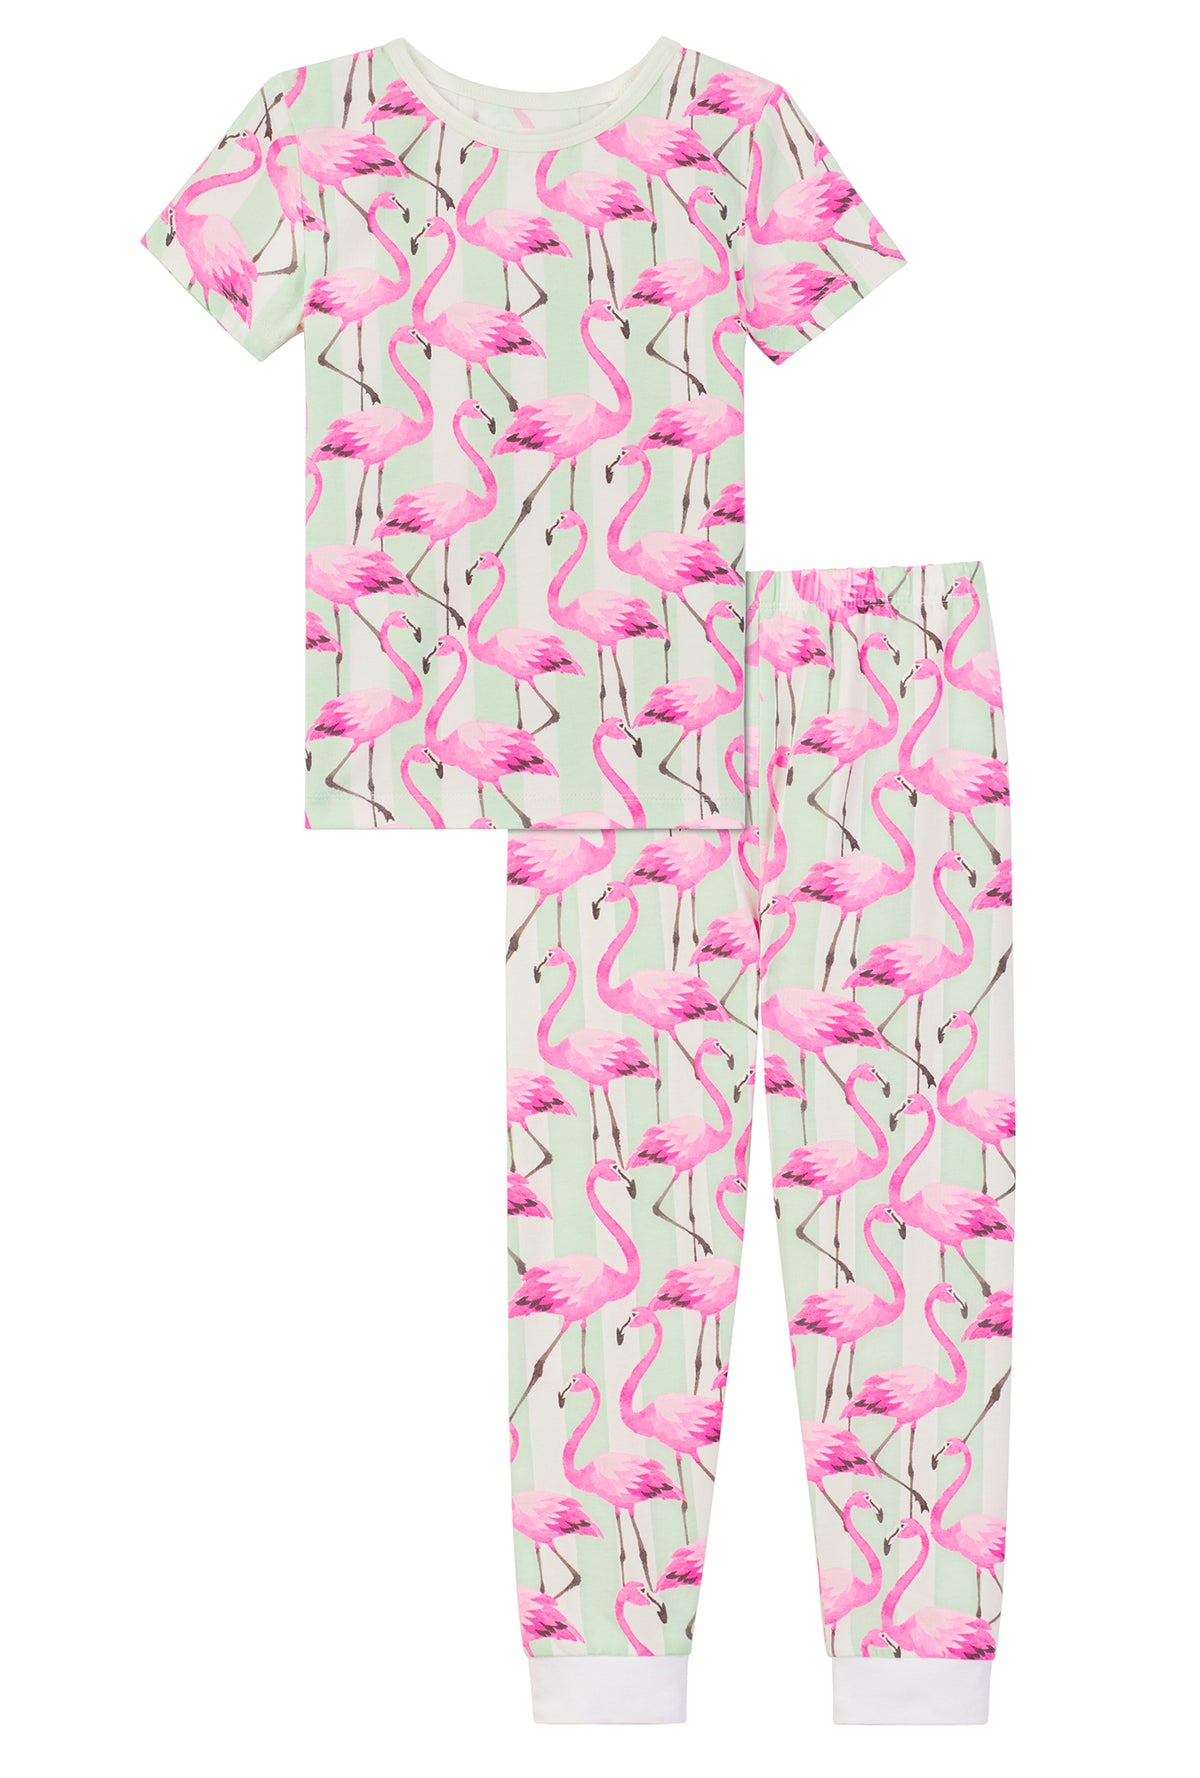 A Flamingo Bay Short Sleeve Stretch Jersey Kids PJ Set